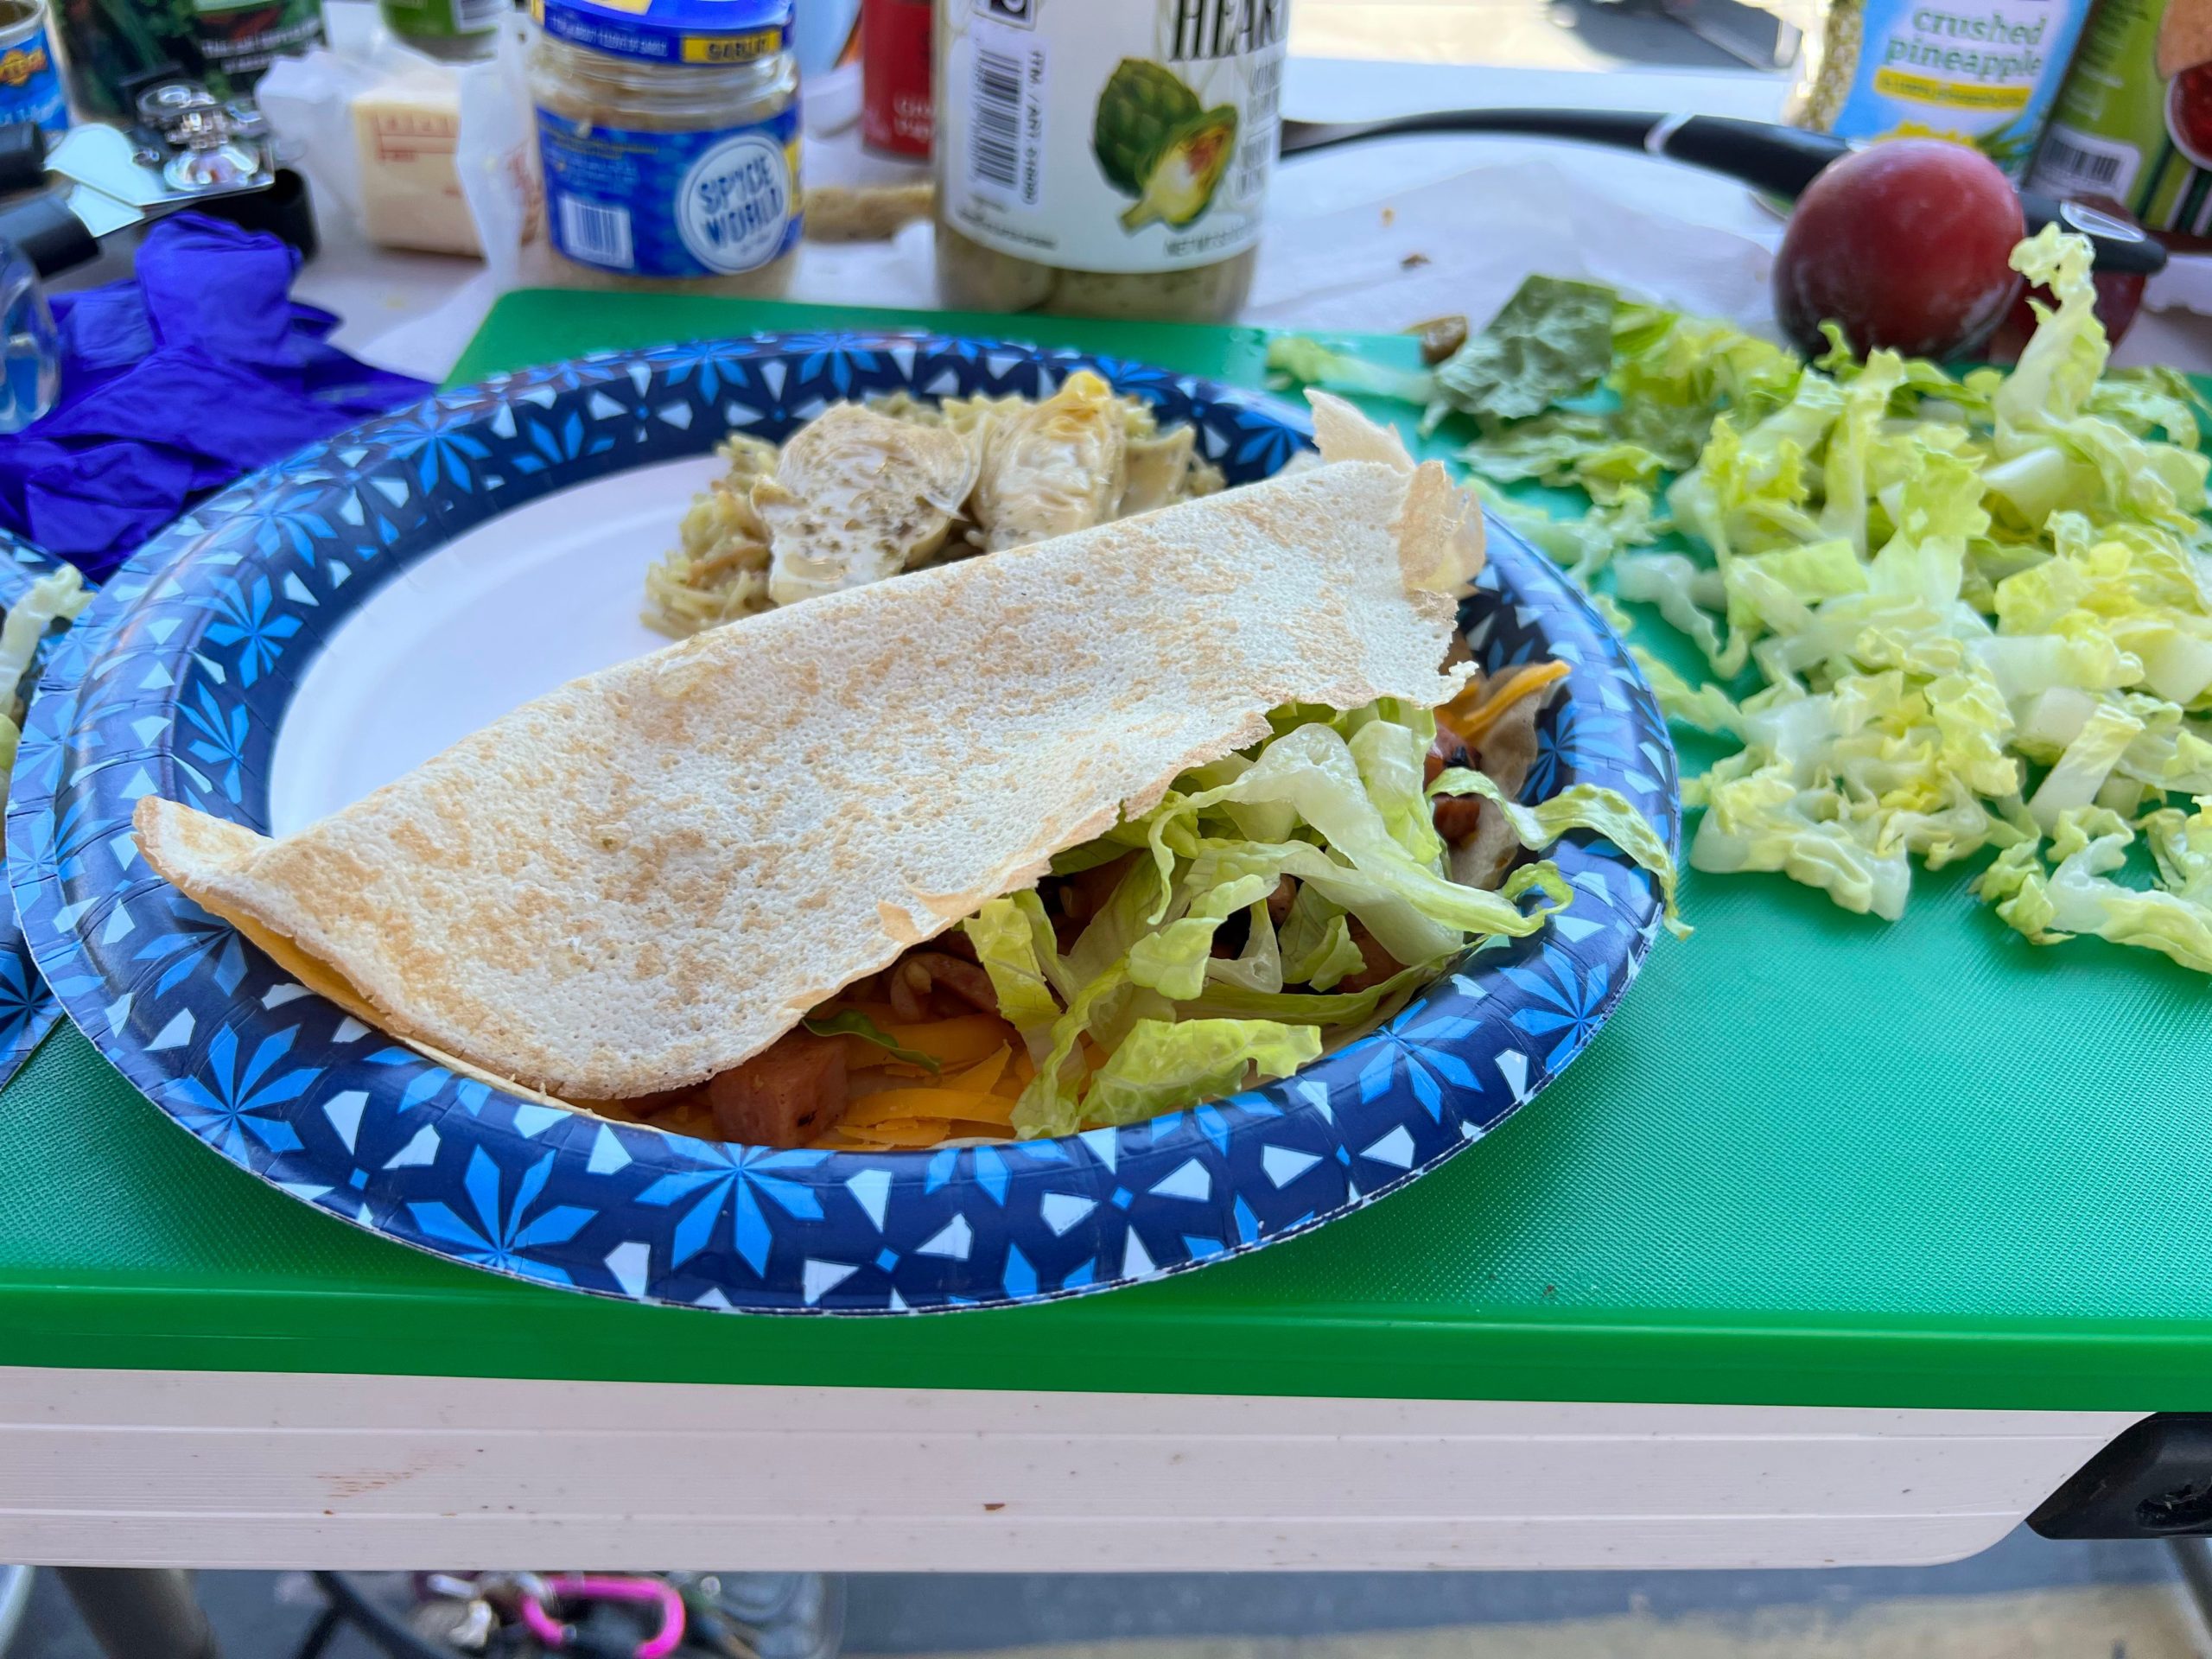 fajita with salad on the plate